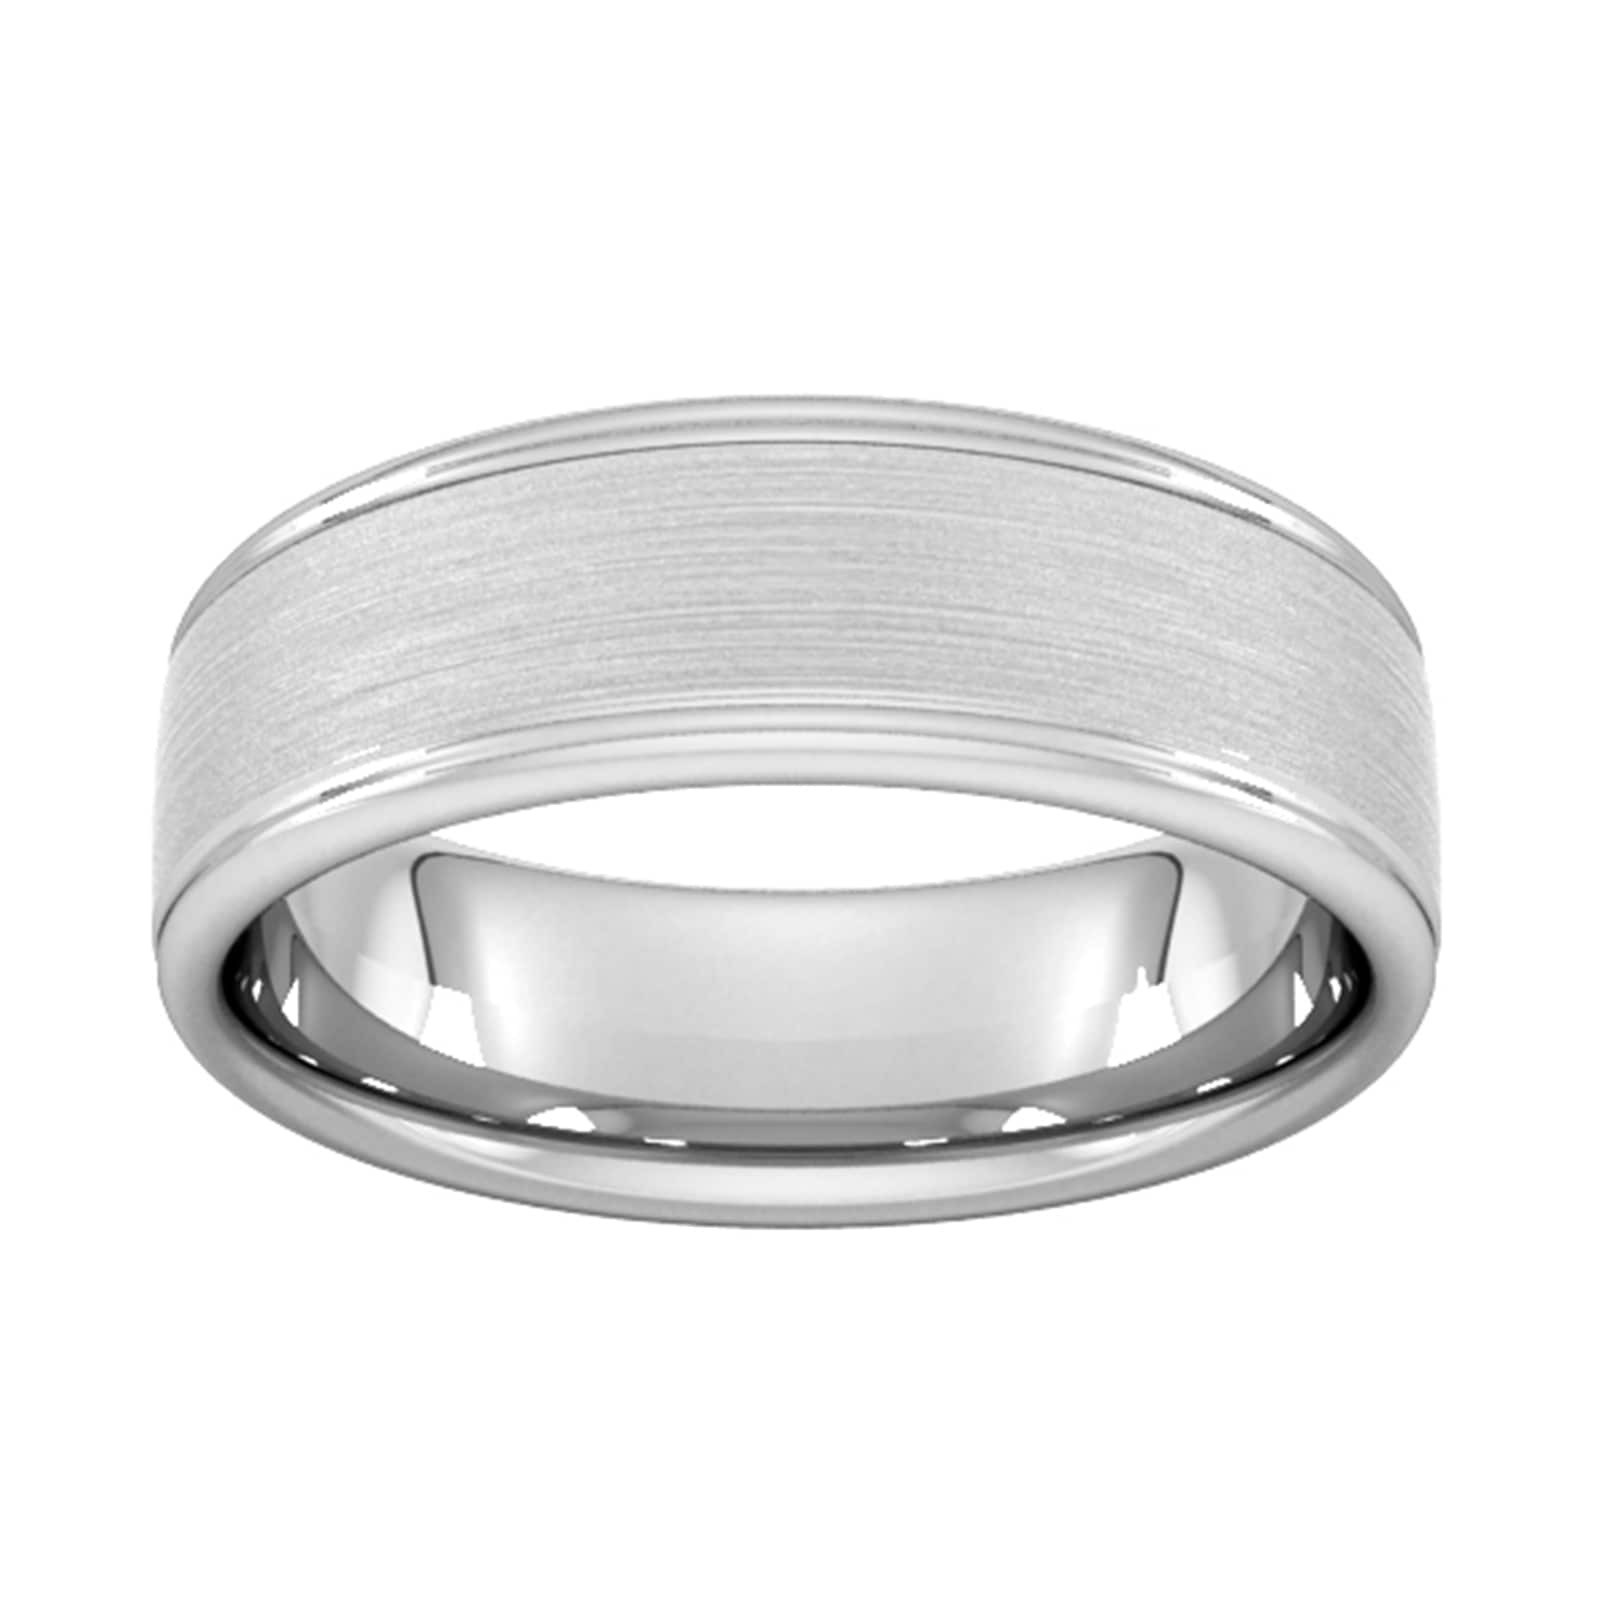 7mm Slight Court Standard Matt Centre With Grooves Wedding Ring In 18 Carat White Gold - Ring Size Q